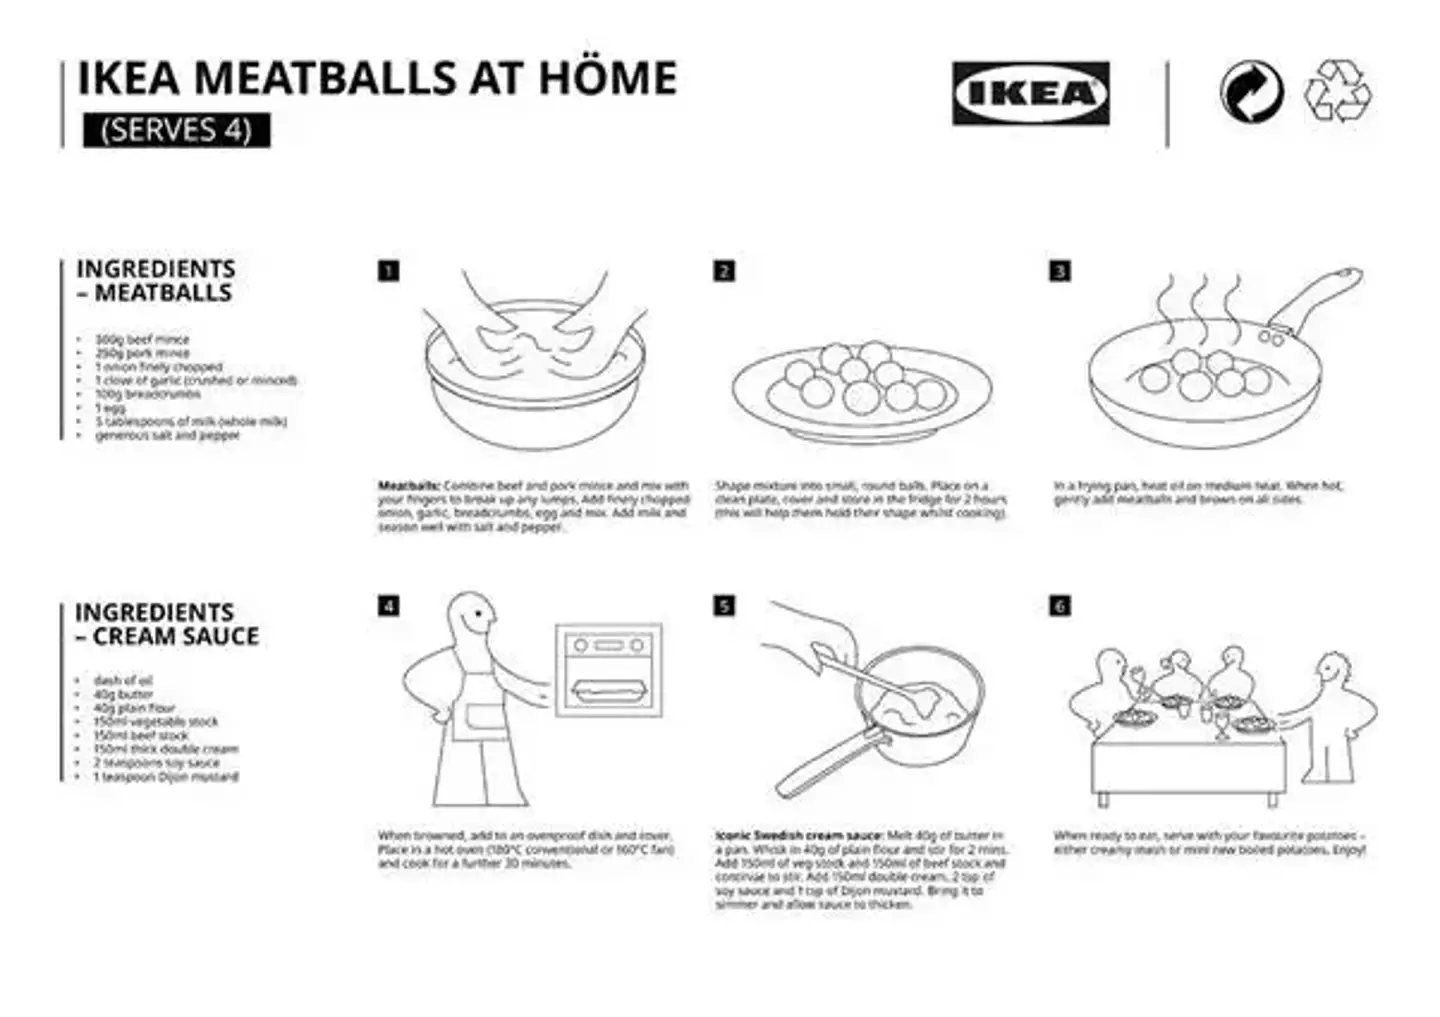 The quintessential Ikea meatballs recipe.